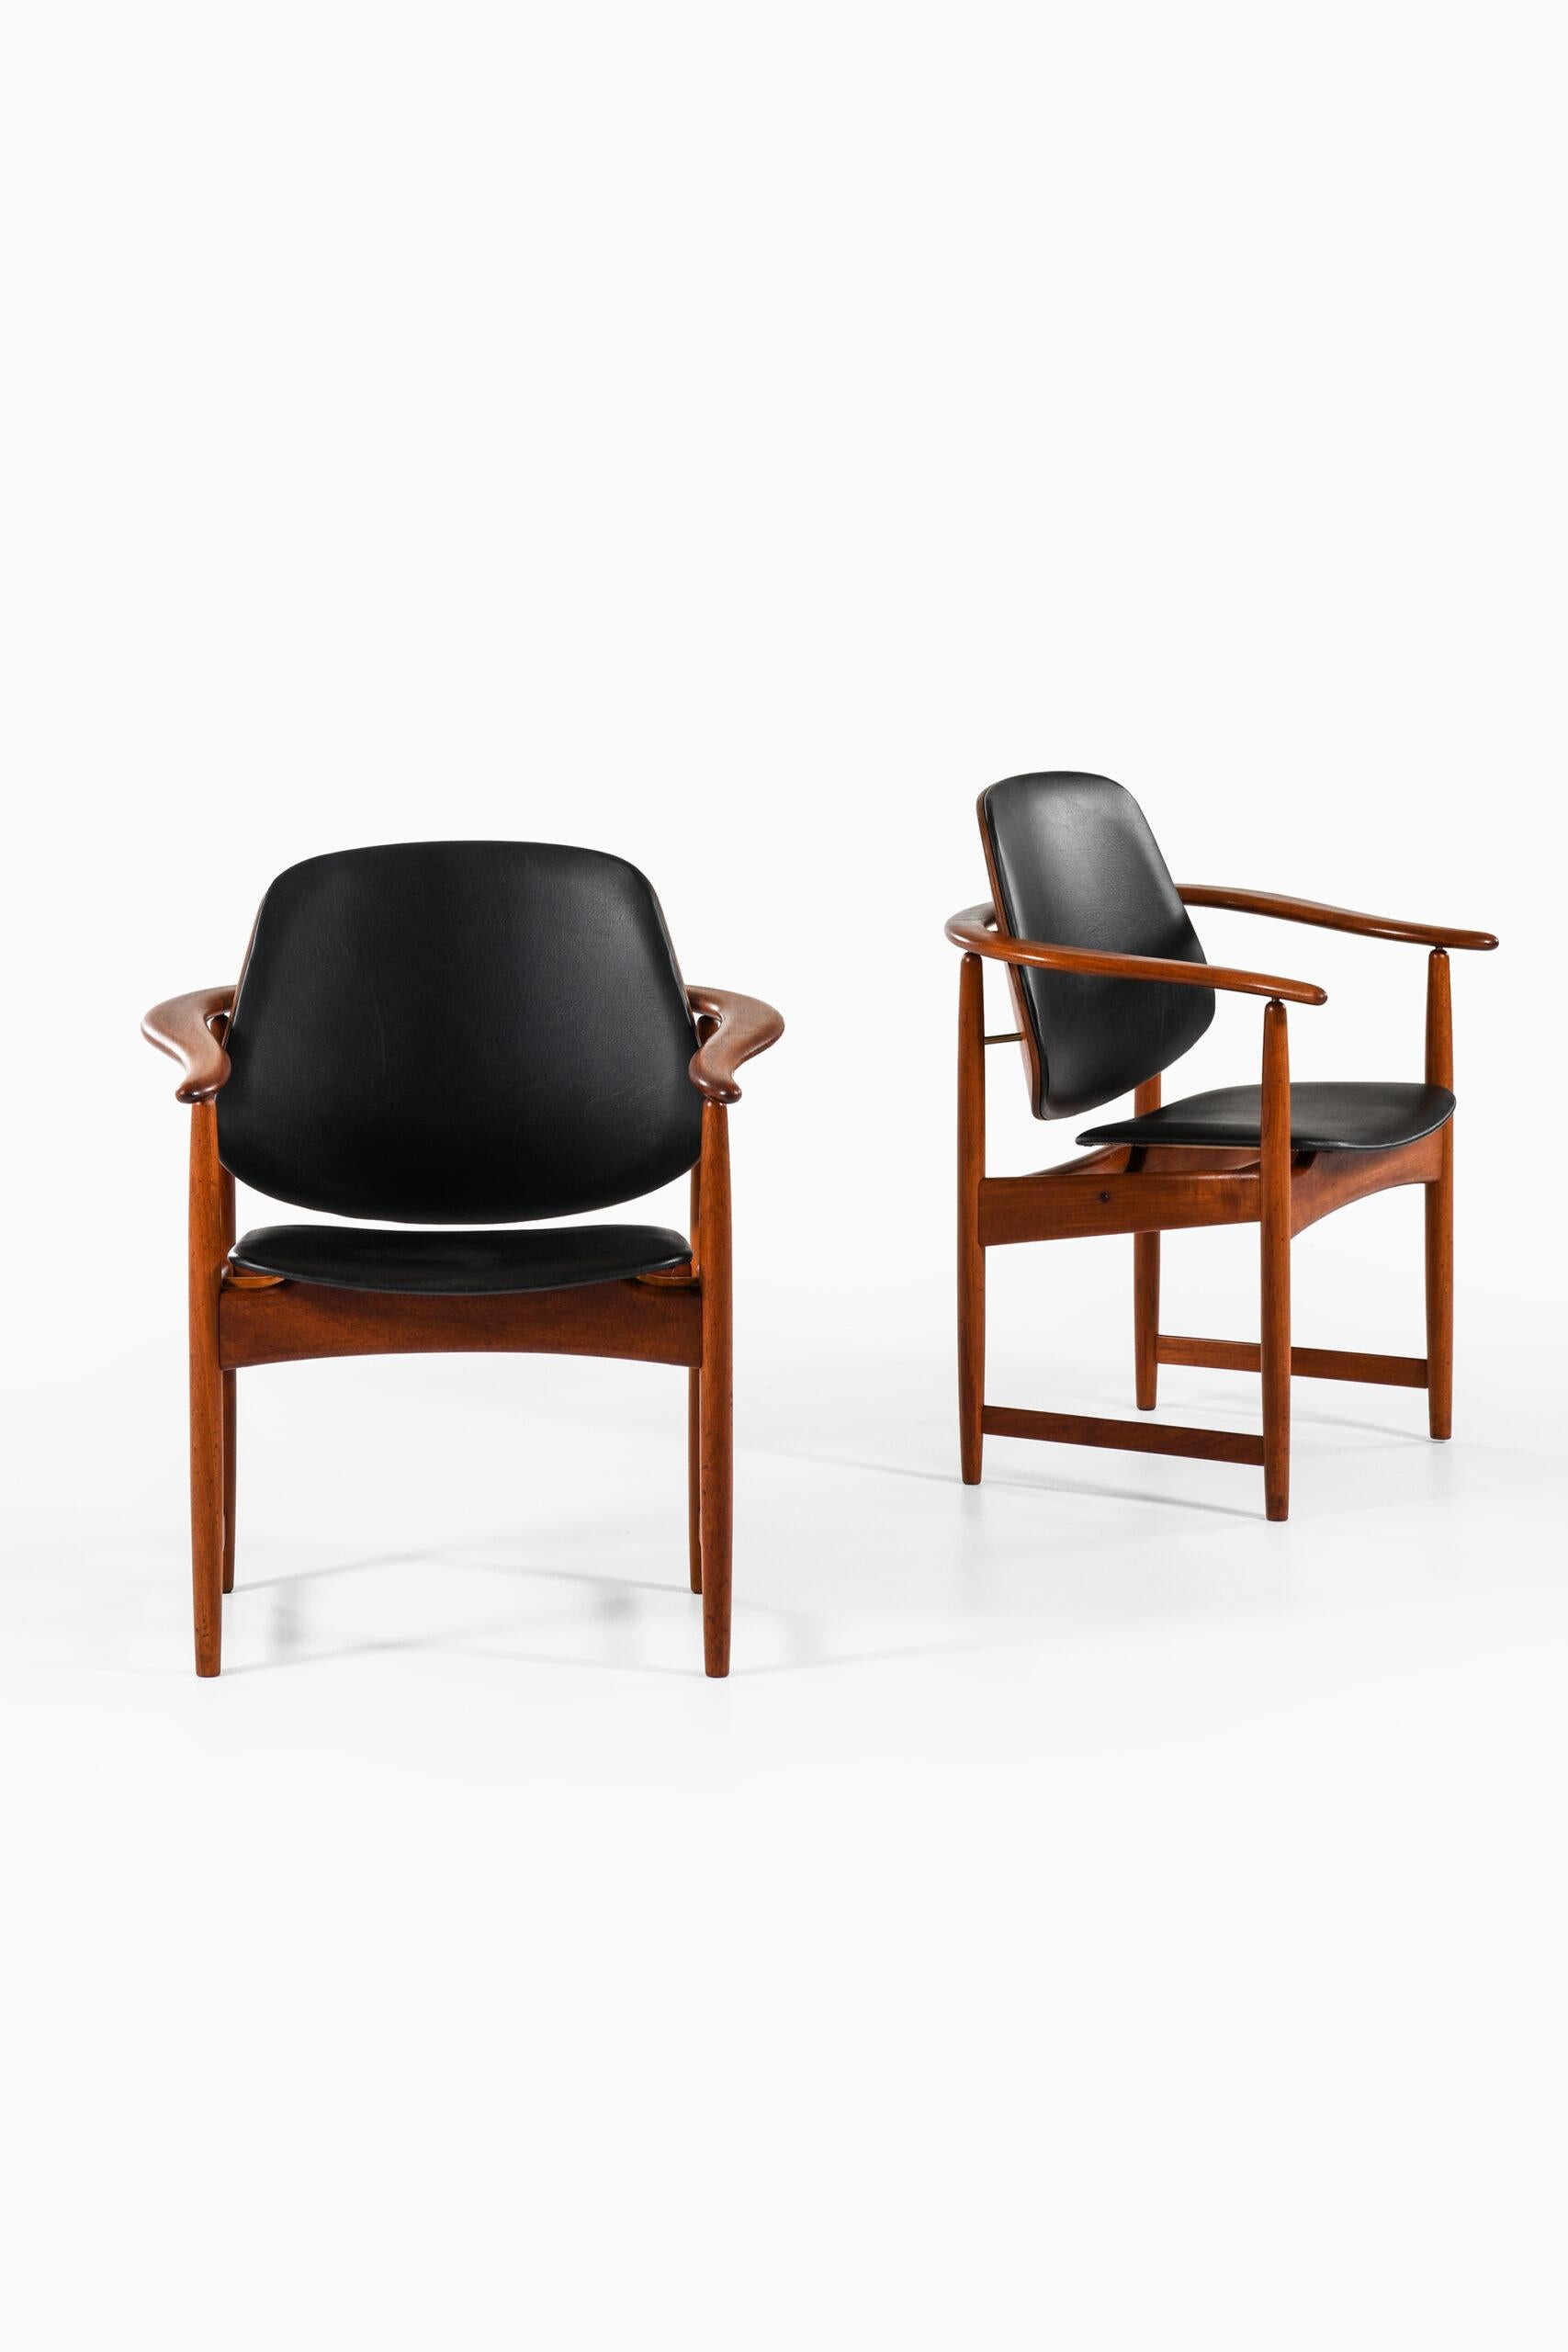 Rare pair of armchairs designed by Arne Hovmand-Olsen. Produced by Onsild Møbelfabrik for Jutex, Århus in Denmark.